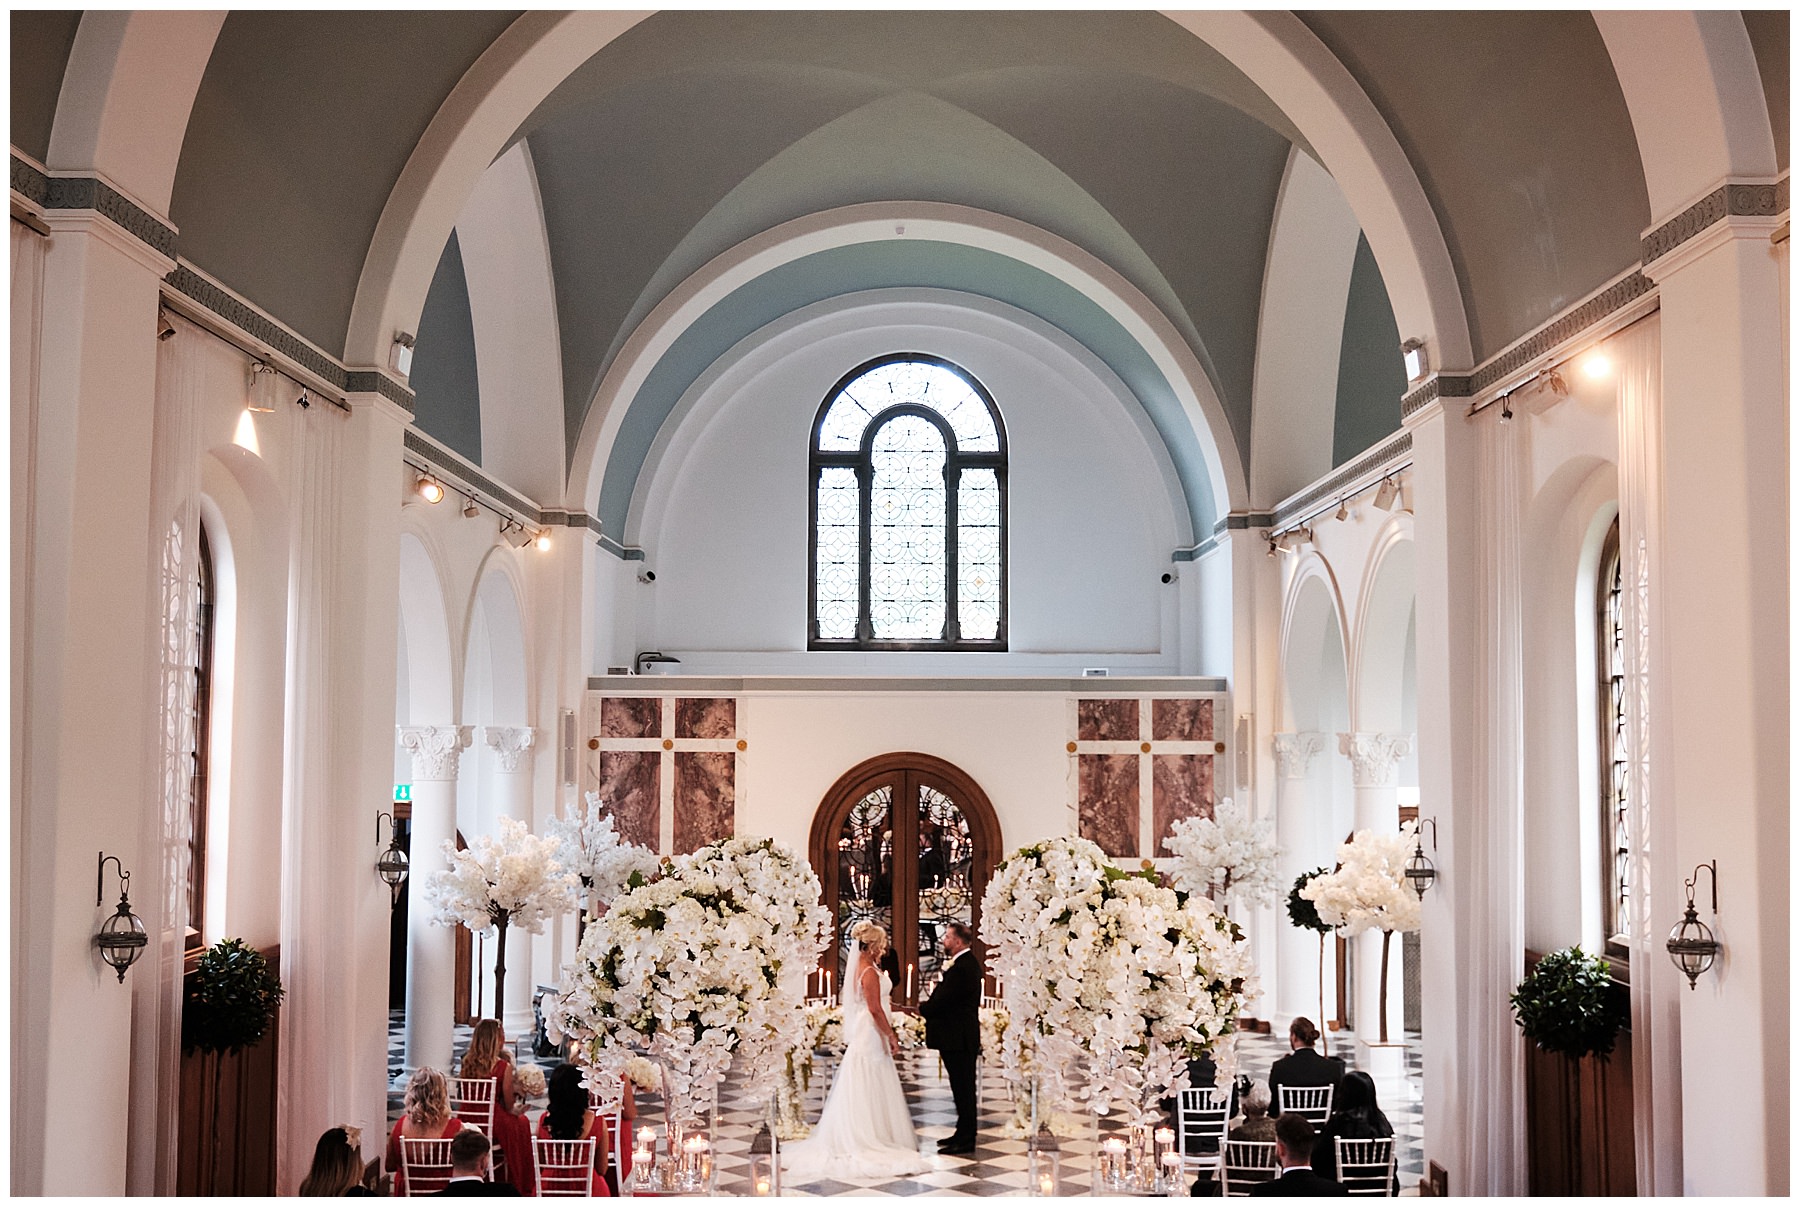 Creative documentary wedding photography at Hawkstone Hall captured by Shropshire Wedding Photographer Stuart James